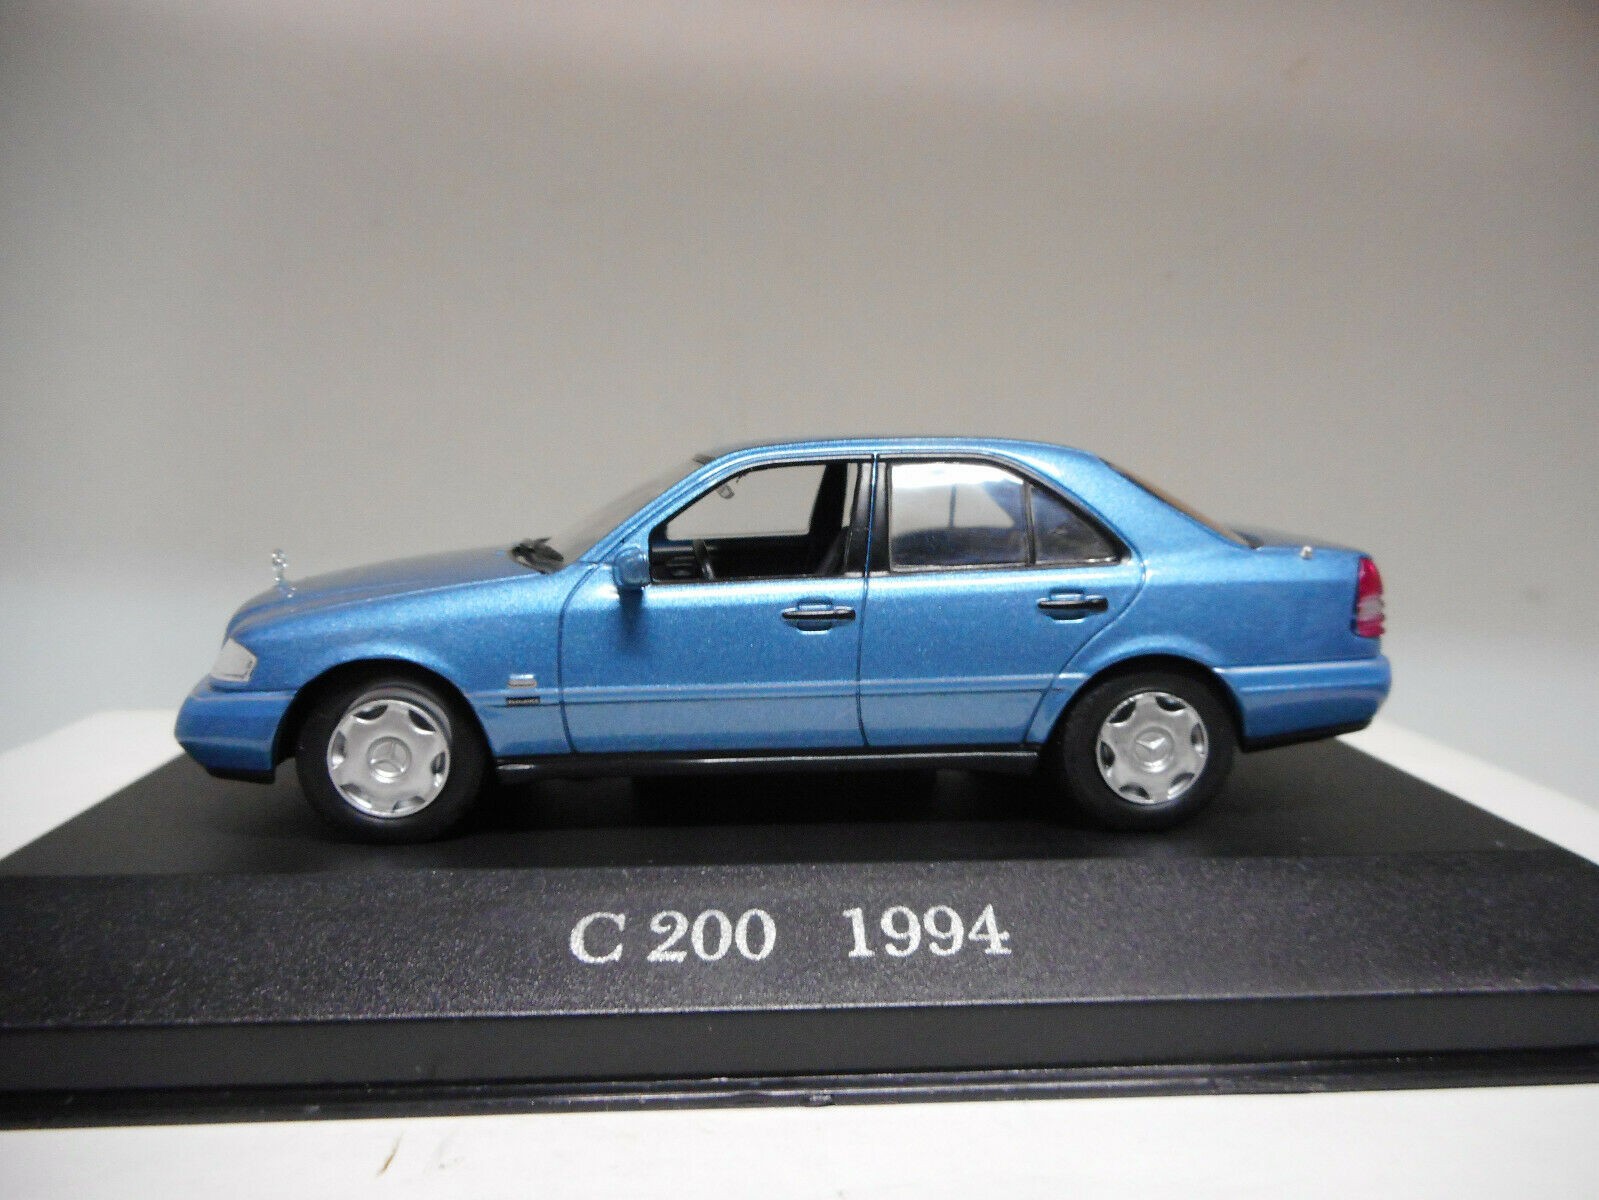 MERCEDES BENZ C200 MODEL CAR BLUE 1994 C 200 1:43 SCALE SALOON IXO COLLECTION K8 